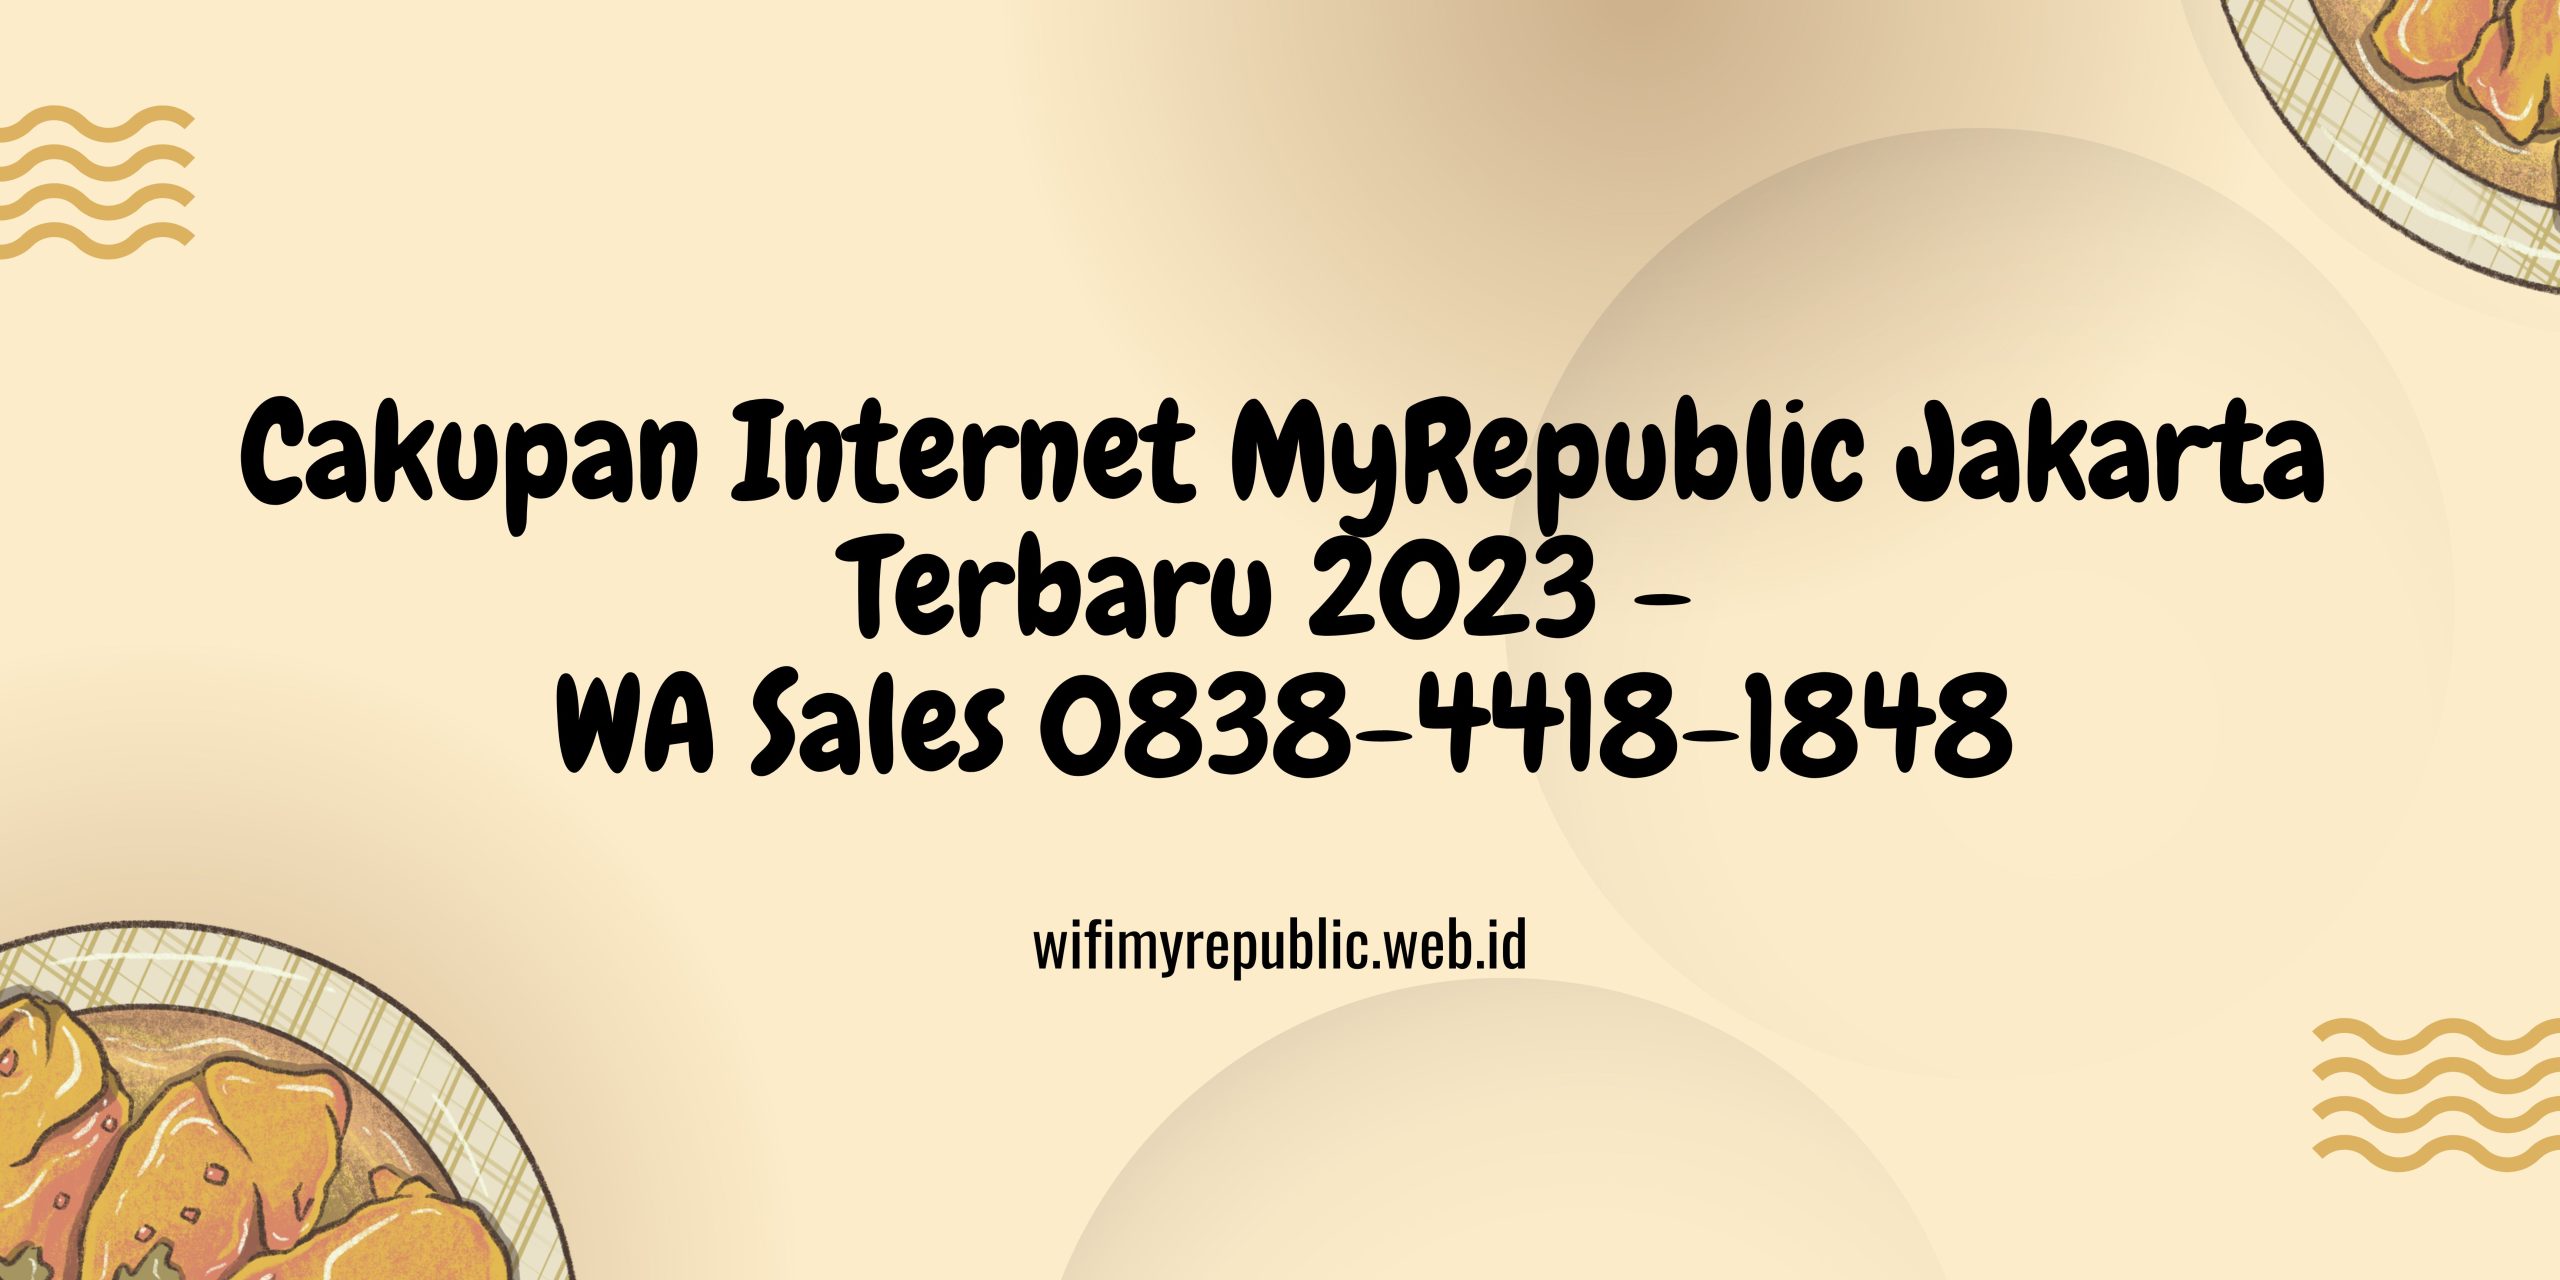 Internet MyRepublic Jakarta